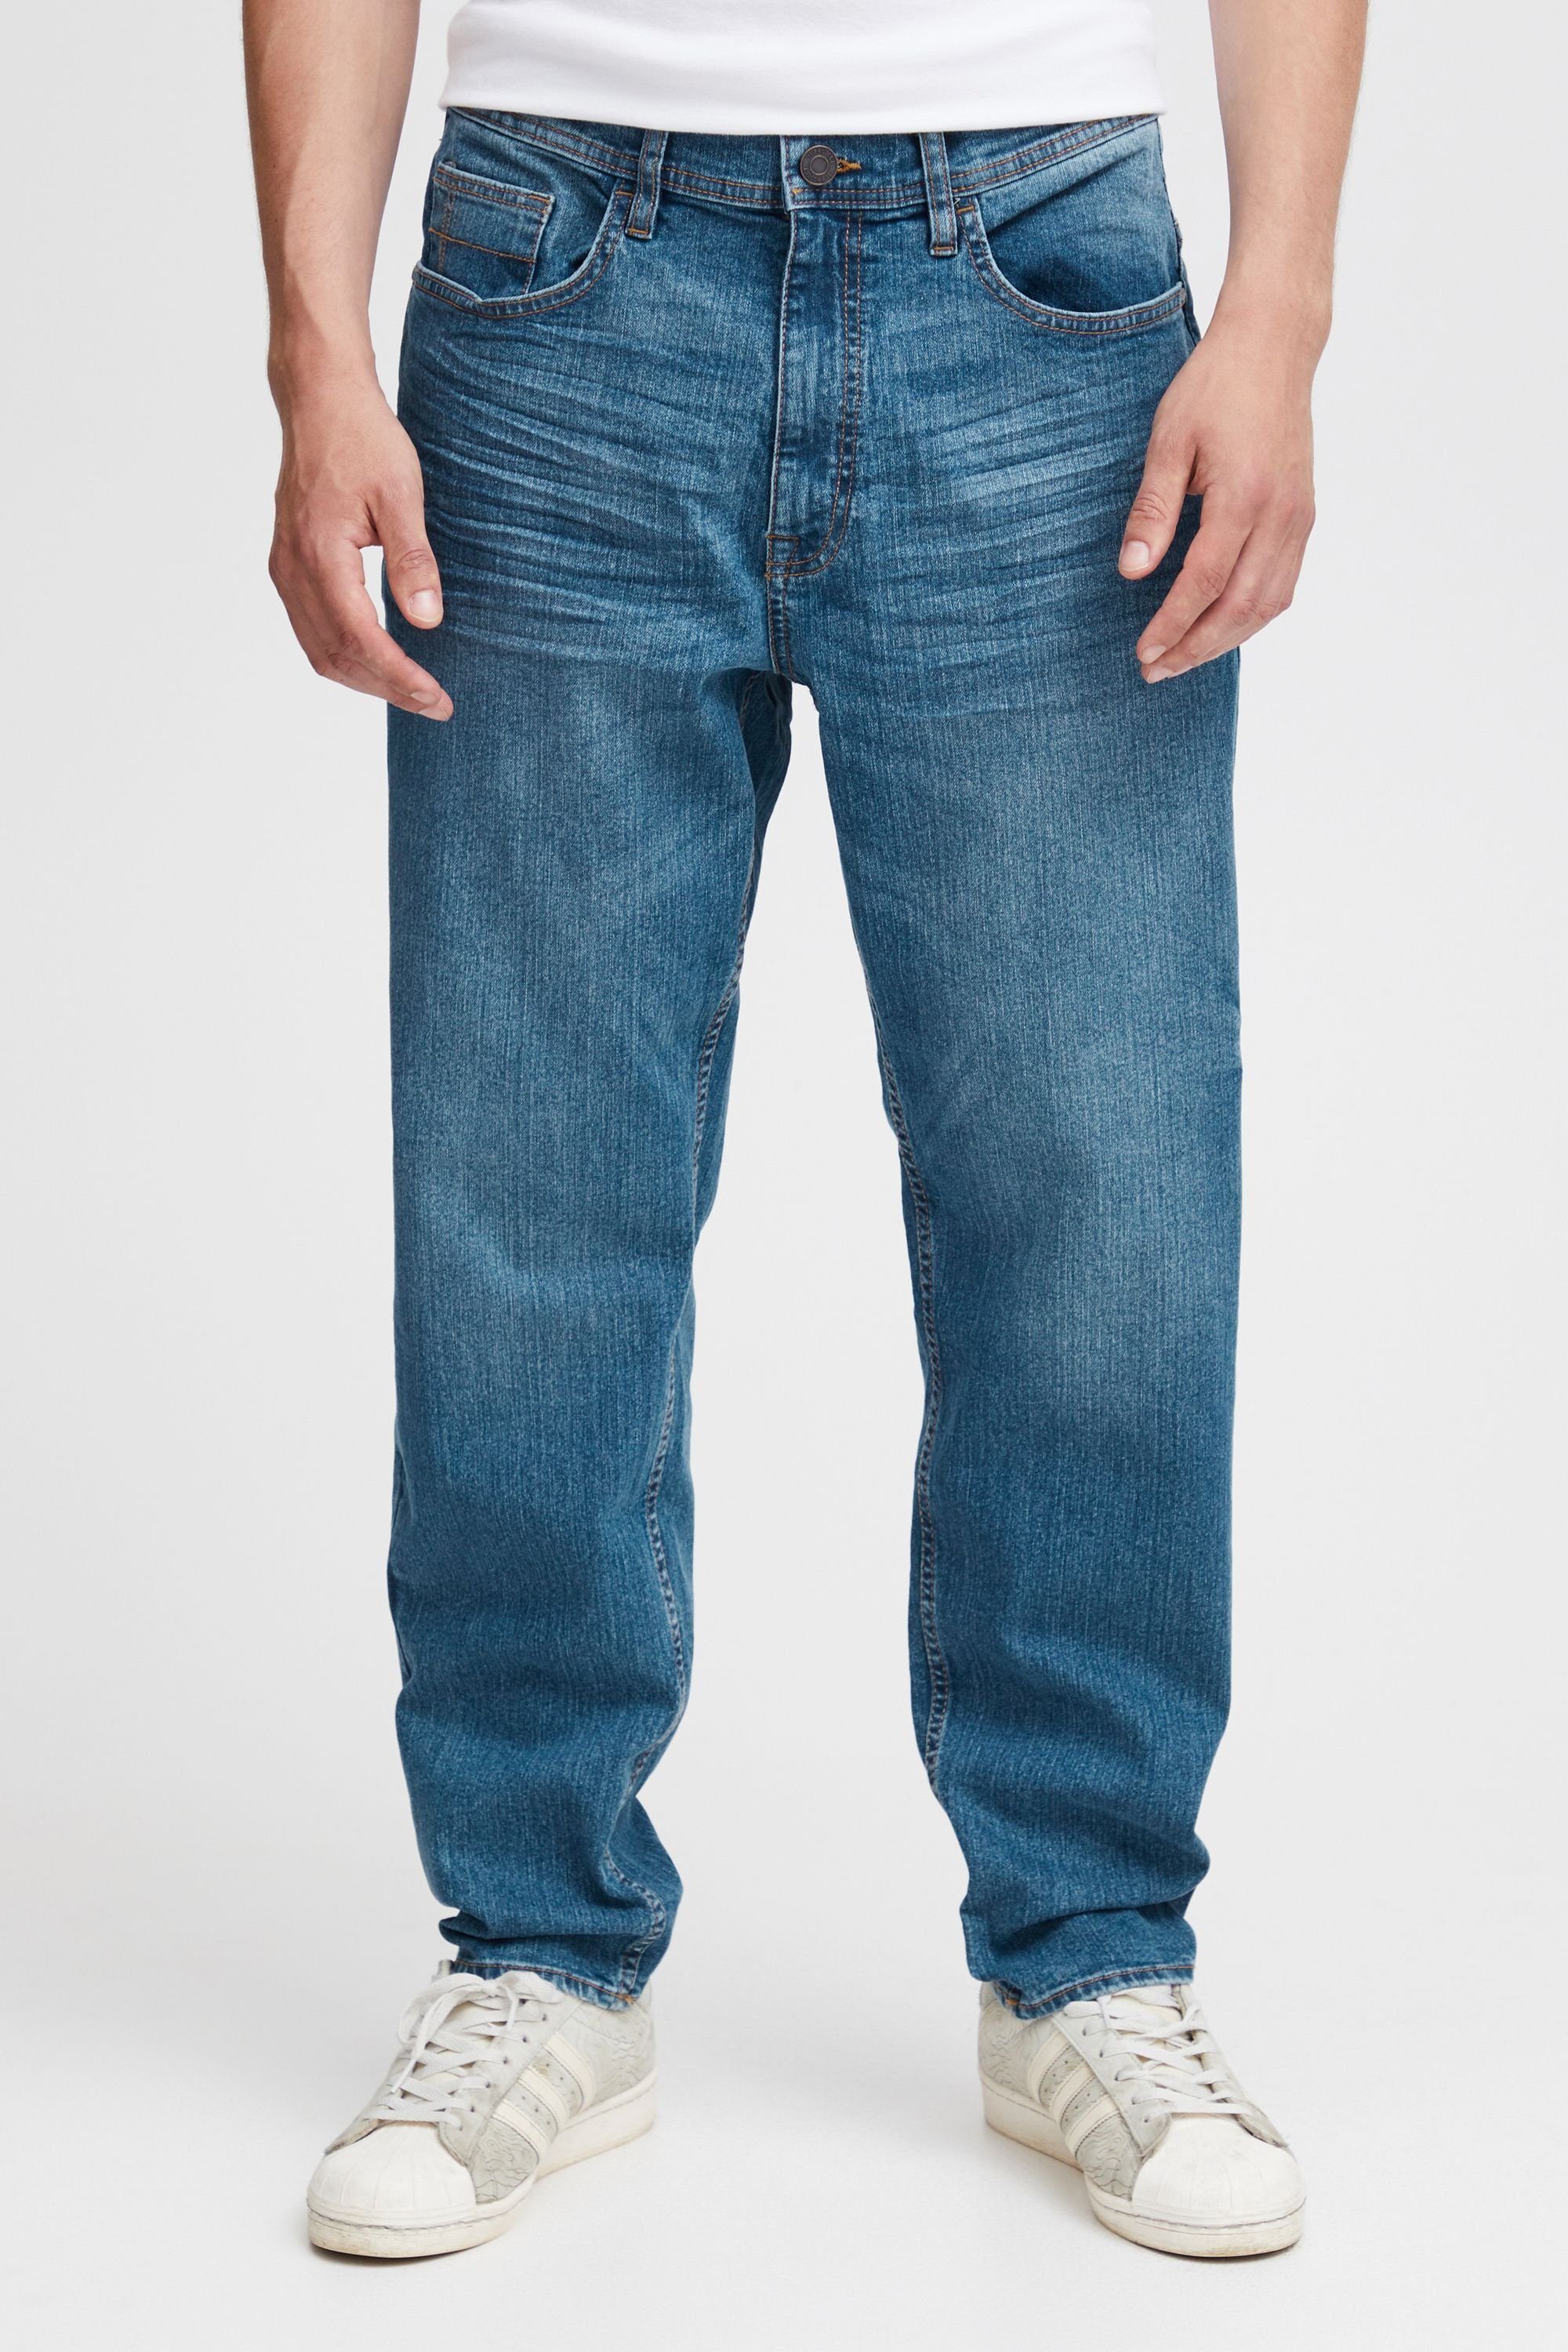 Project middle Project 5-Pocket-Jeans Denim 11 11 blue PRMads